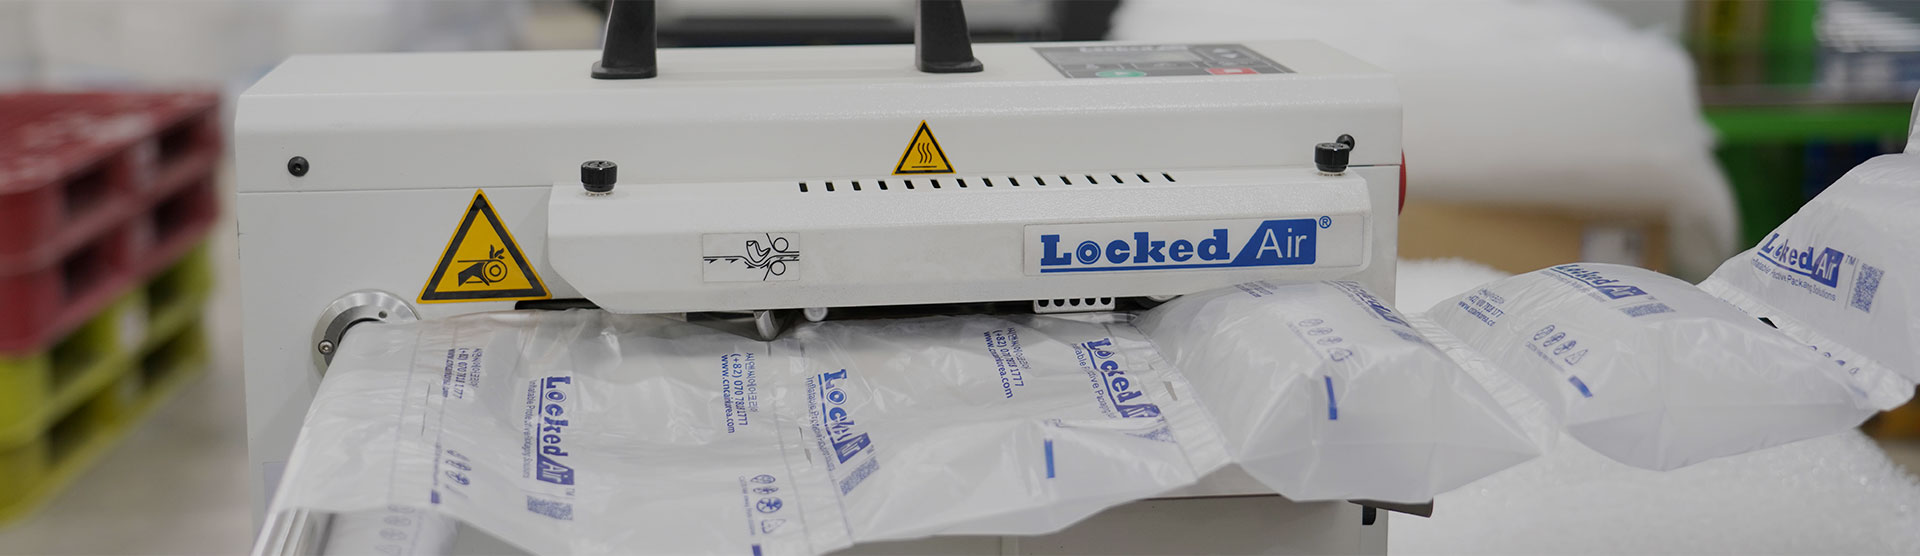 LockedPaper Paper Cushion Machine Tutorial Video of LP-C1